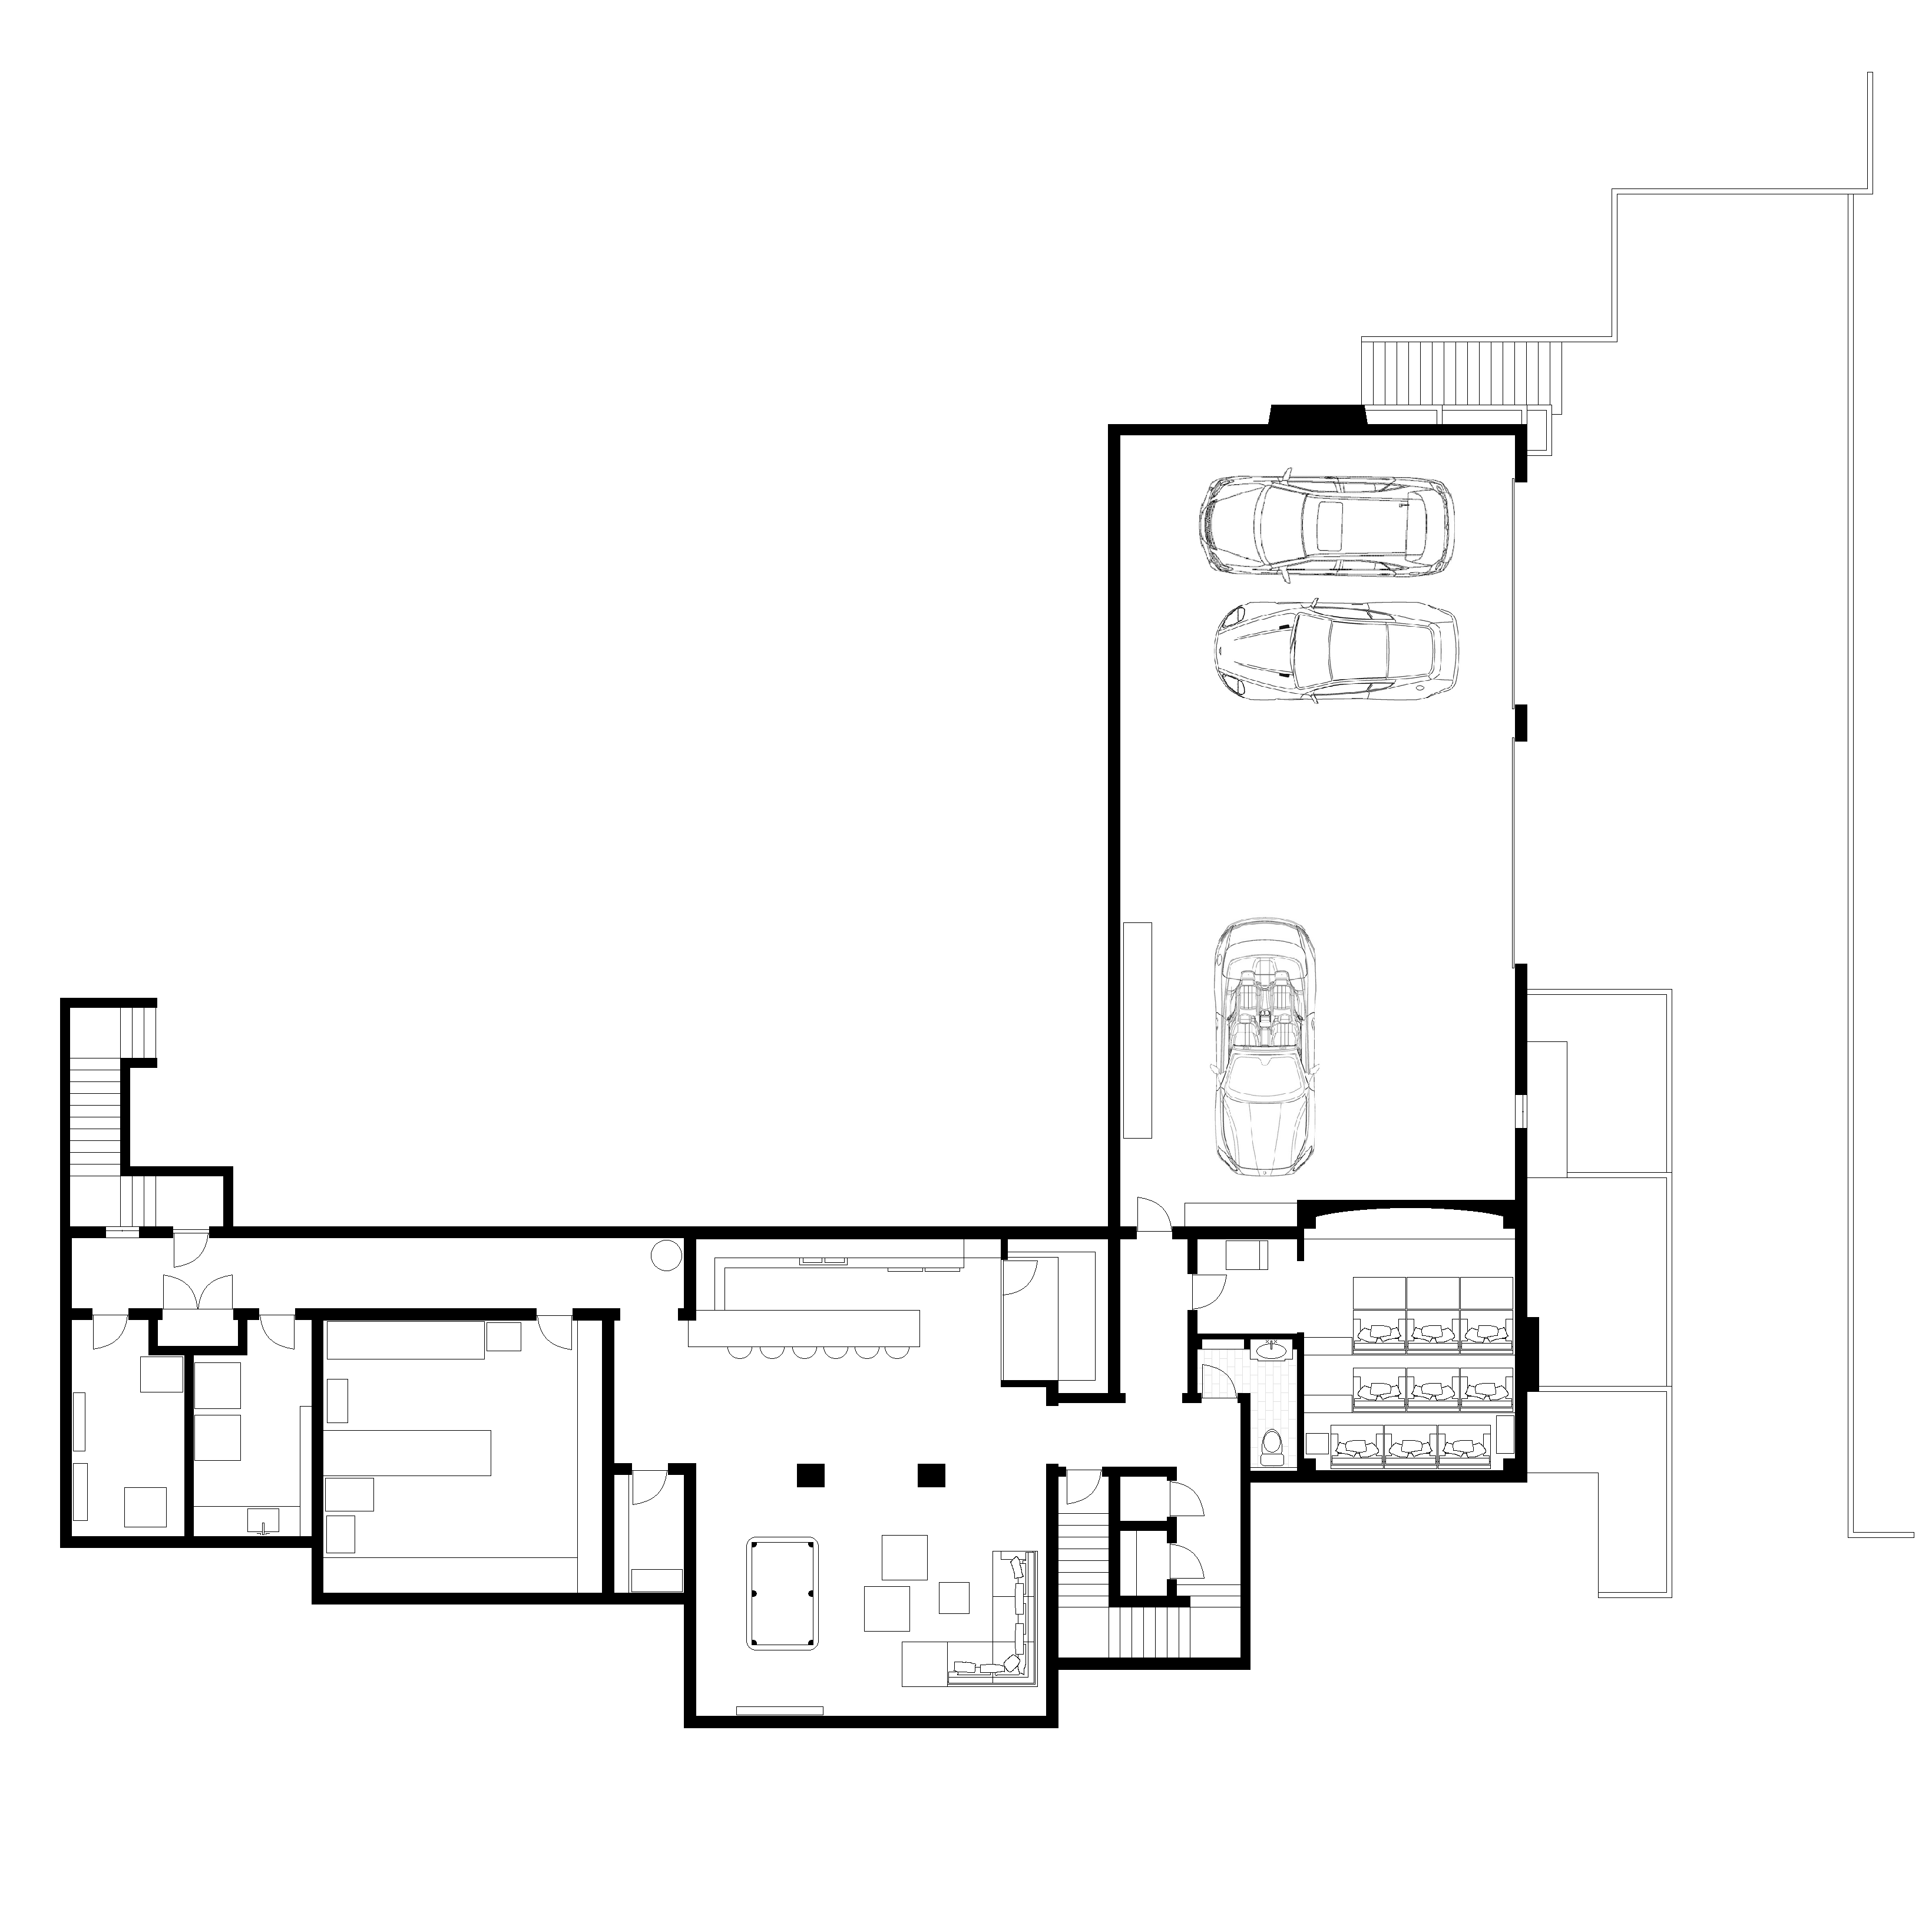 Basement floor plans Mechanical room, Laundry room